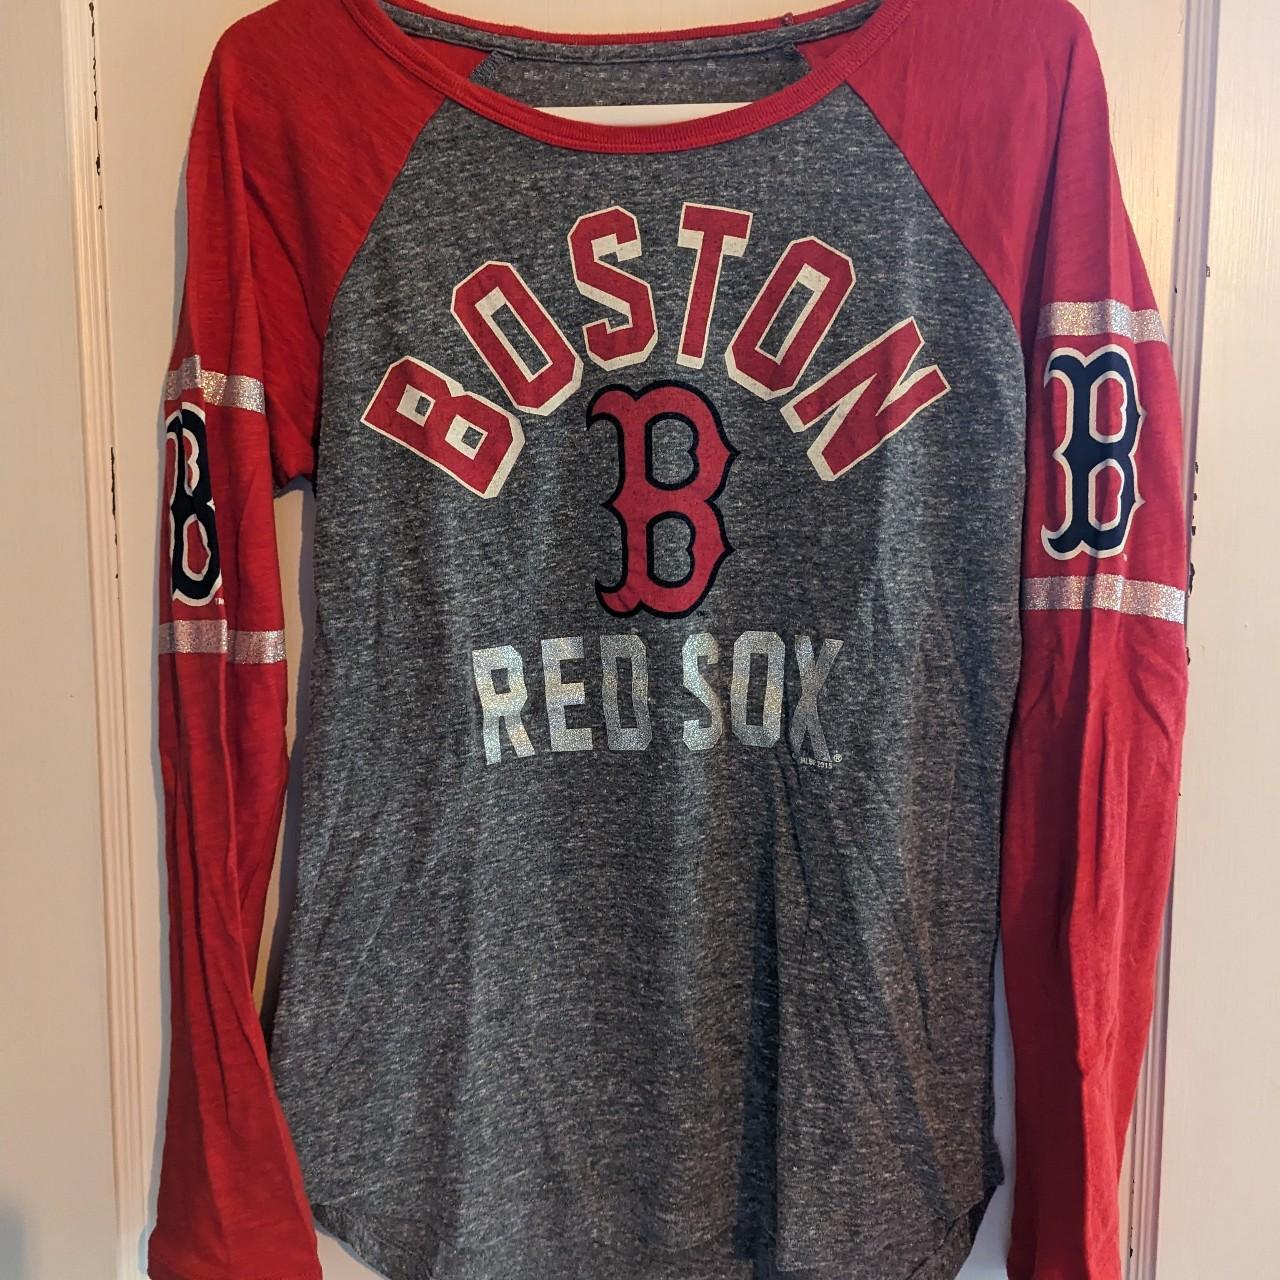 boston red sox womens shirts